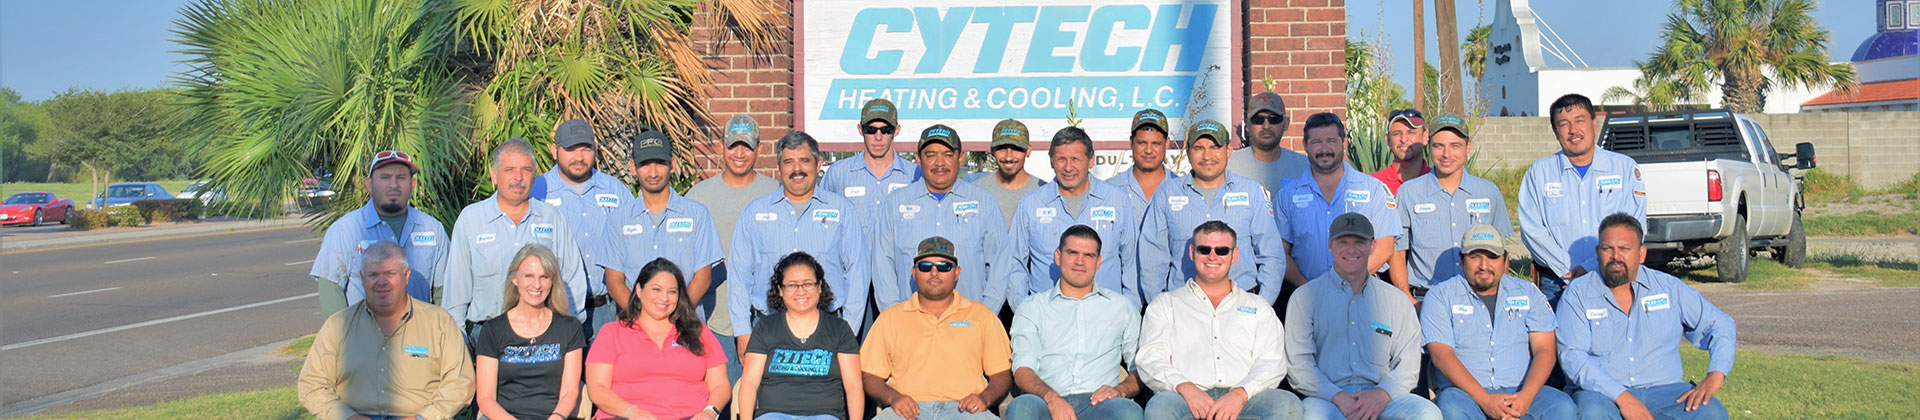 Cytech Heating & Cooling 3917 W State Highway 107, Edinburg, TX 78539